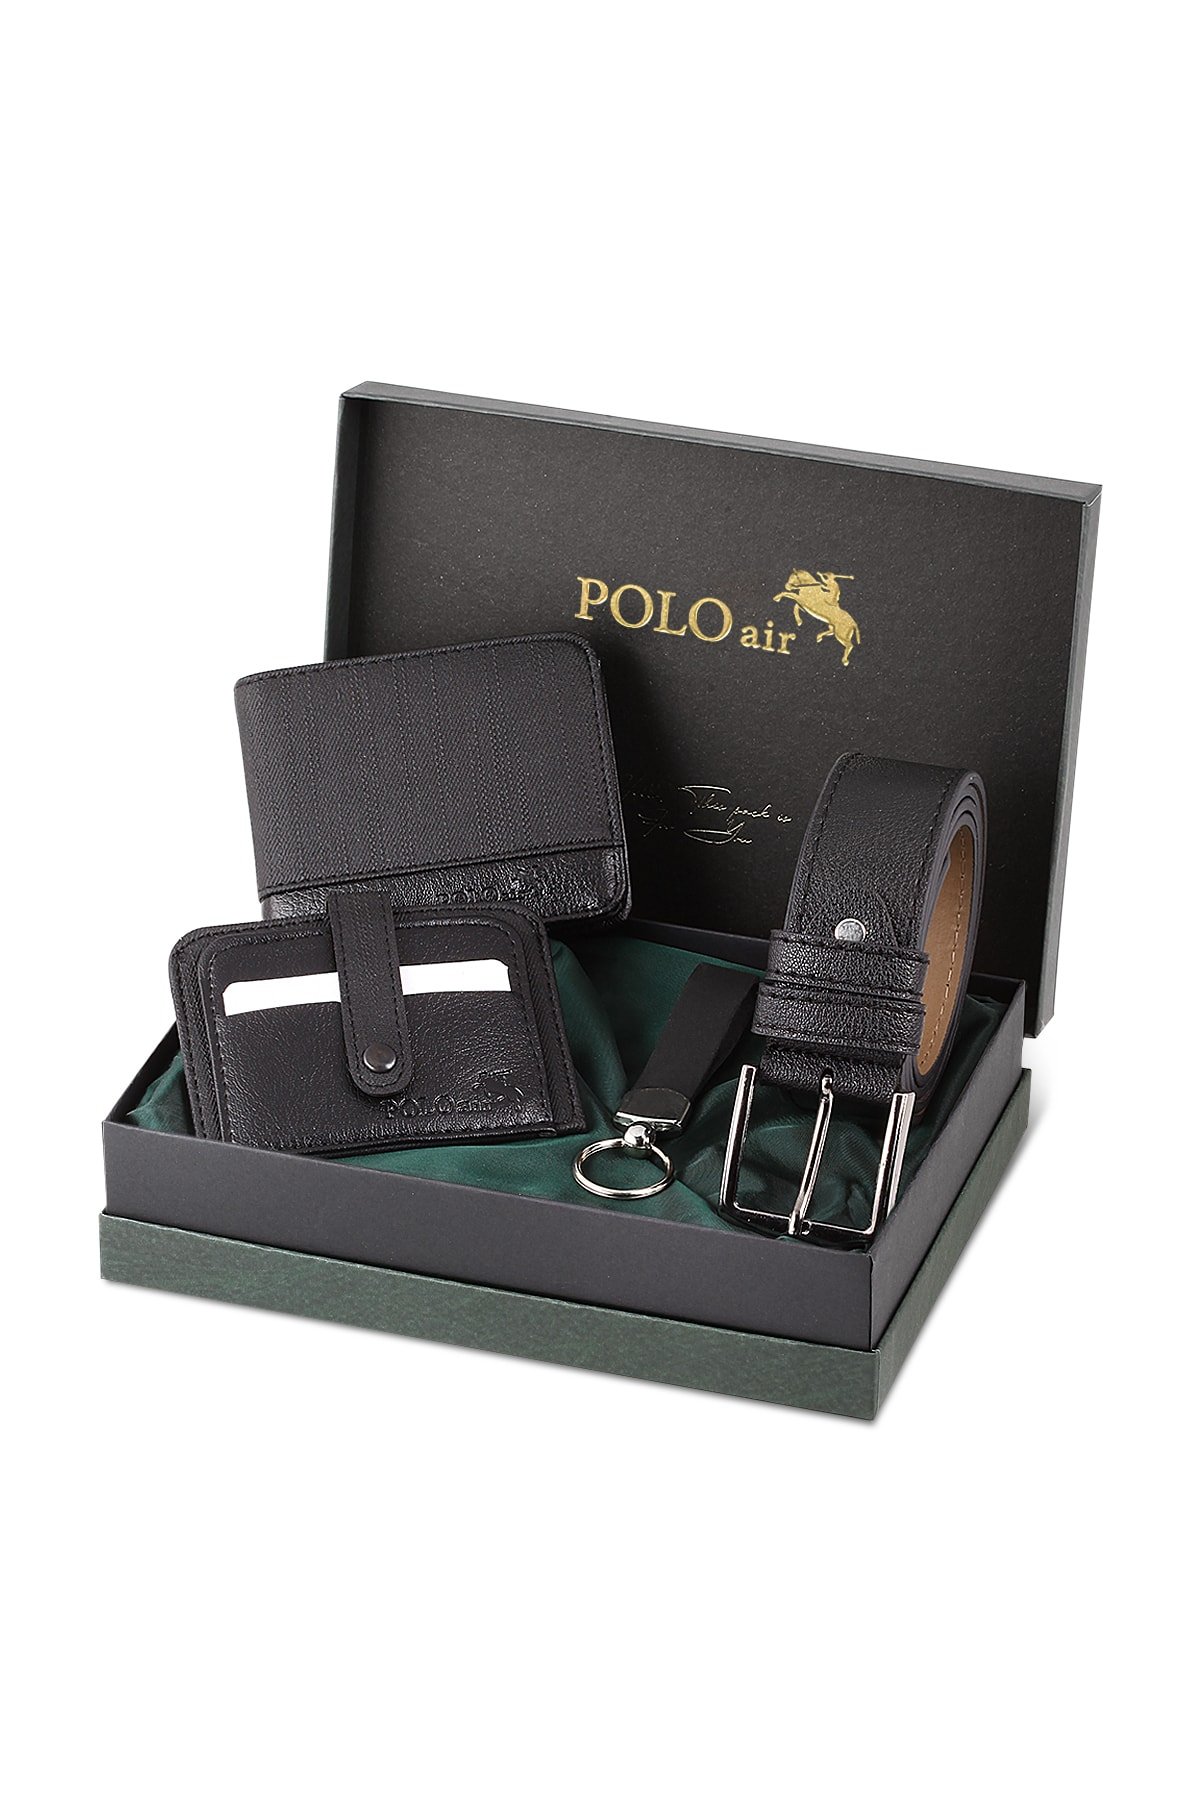 Levně Polo Air Belt, Wallet, Card Holder, Keychain, Black Set in a Gift Box